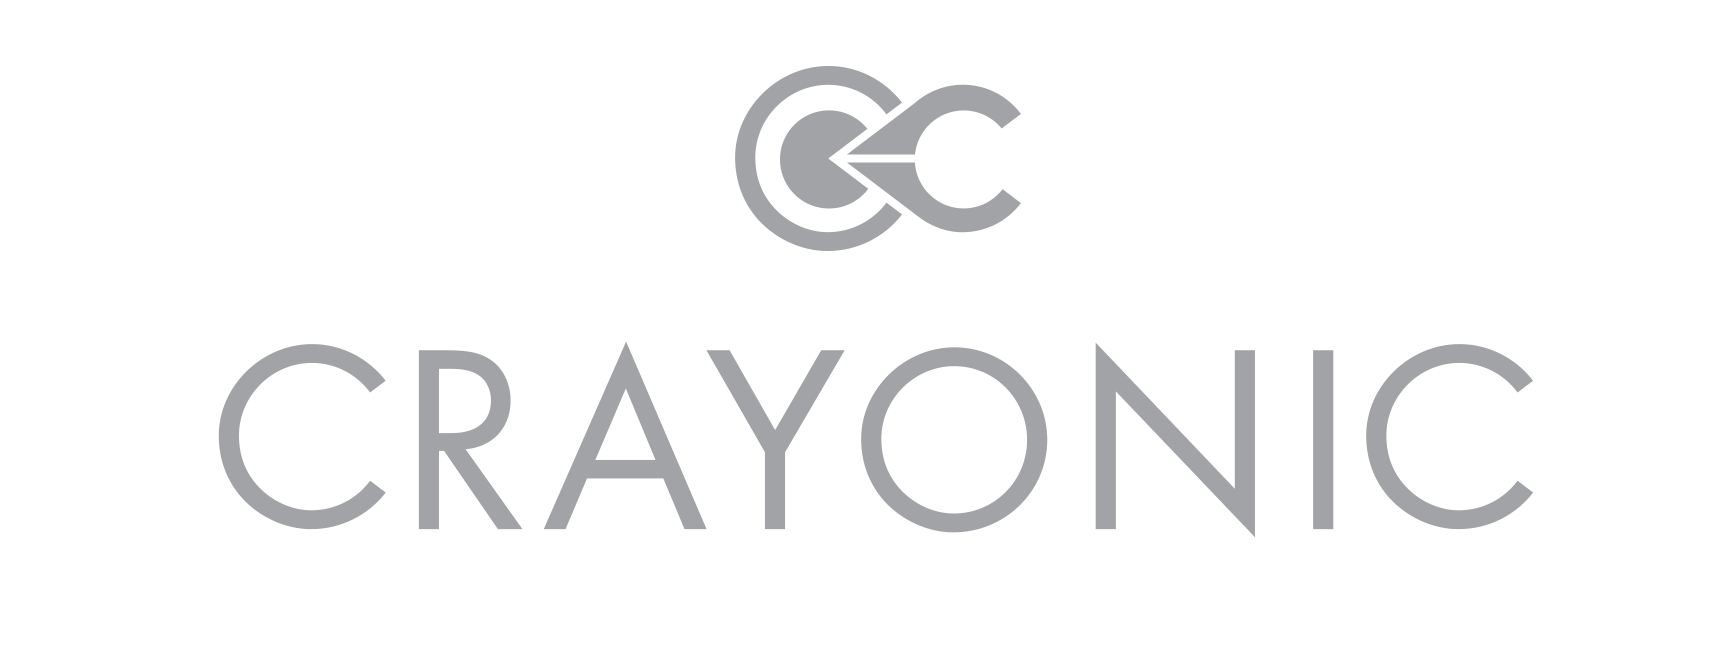 Crayonic logo